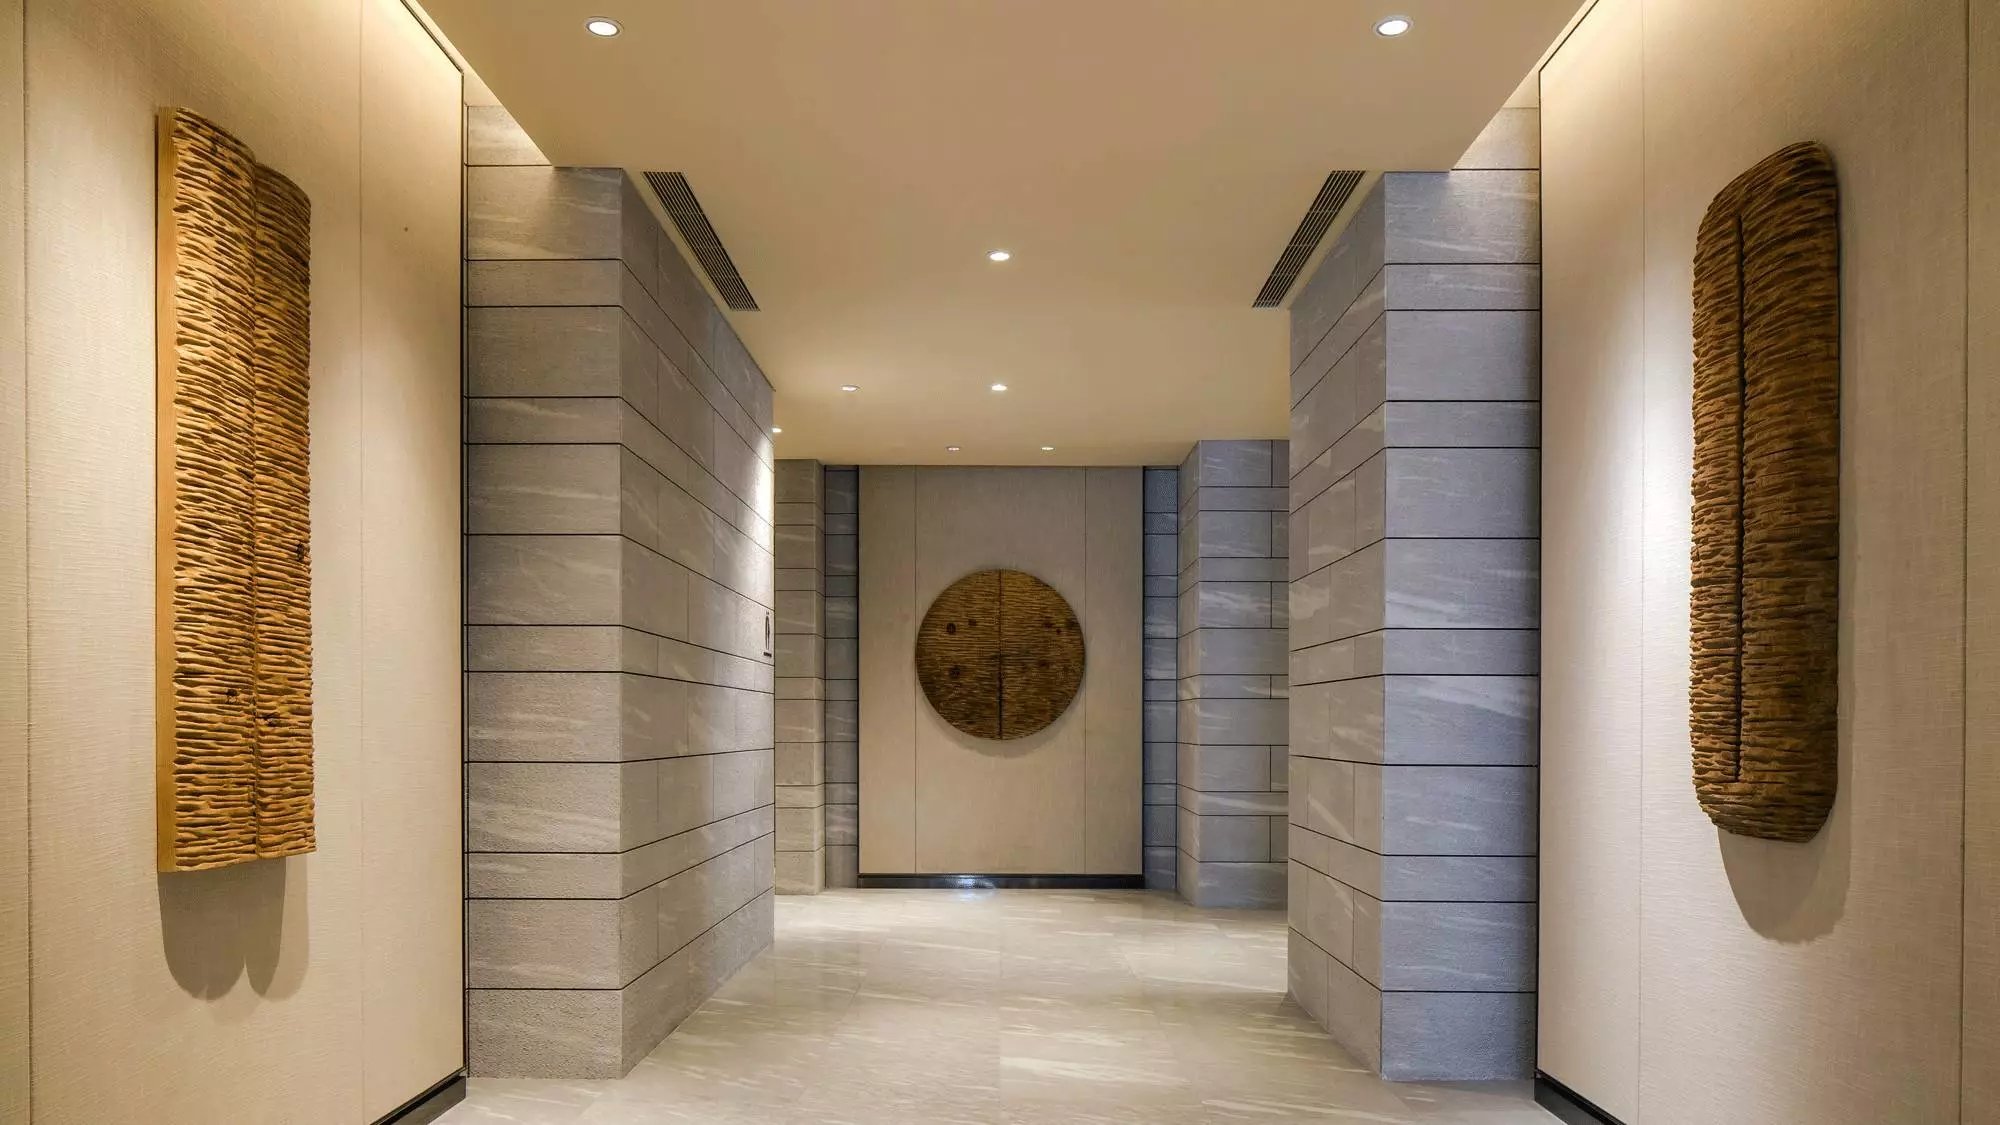 Design of Hilton South Sea Wing Hotel Corridor